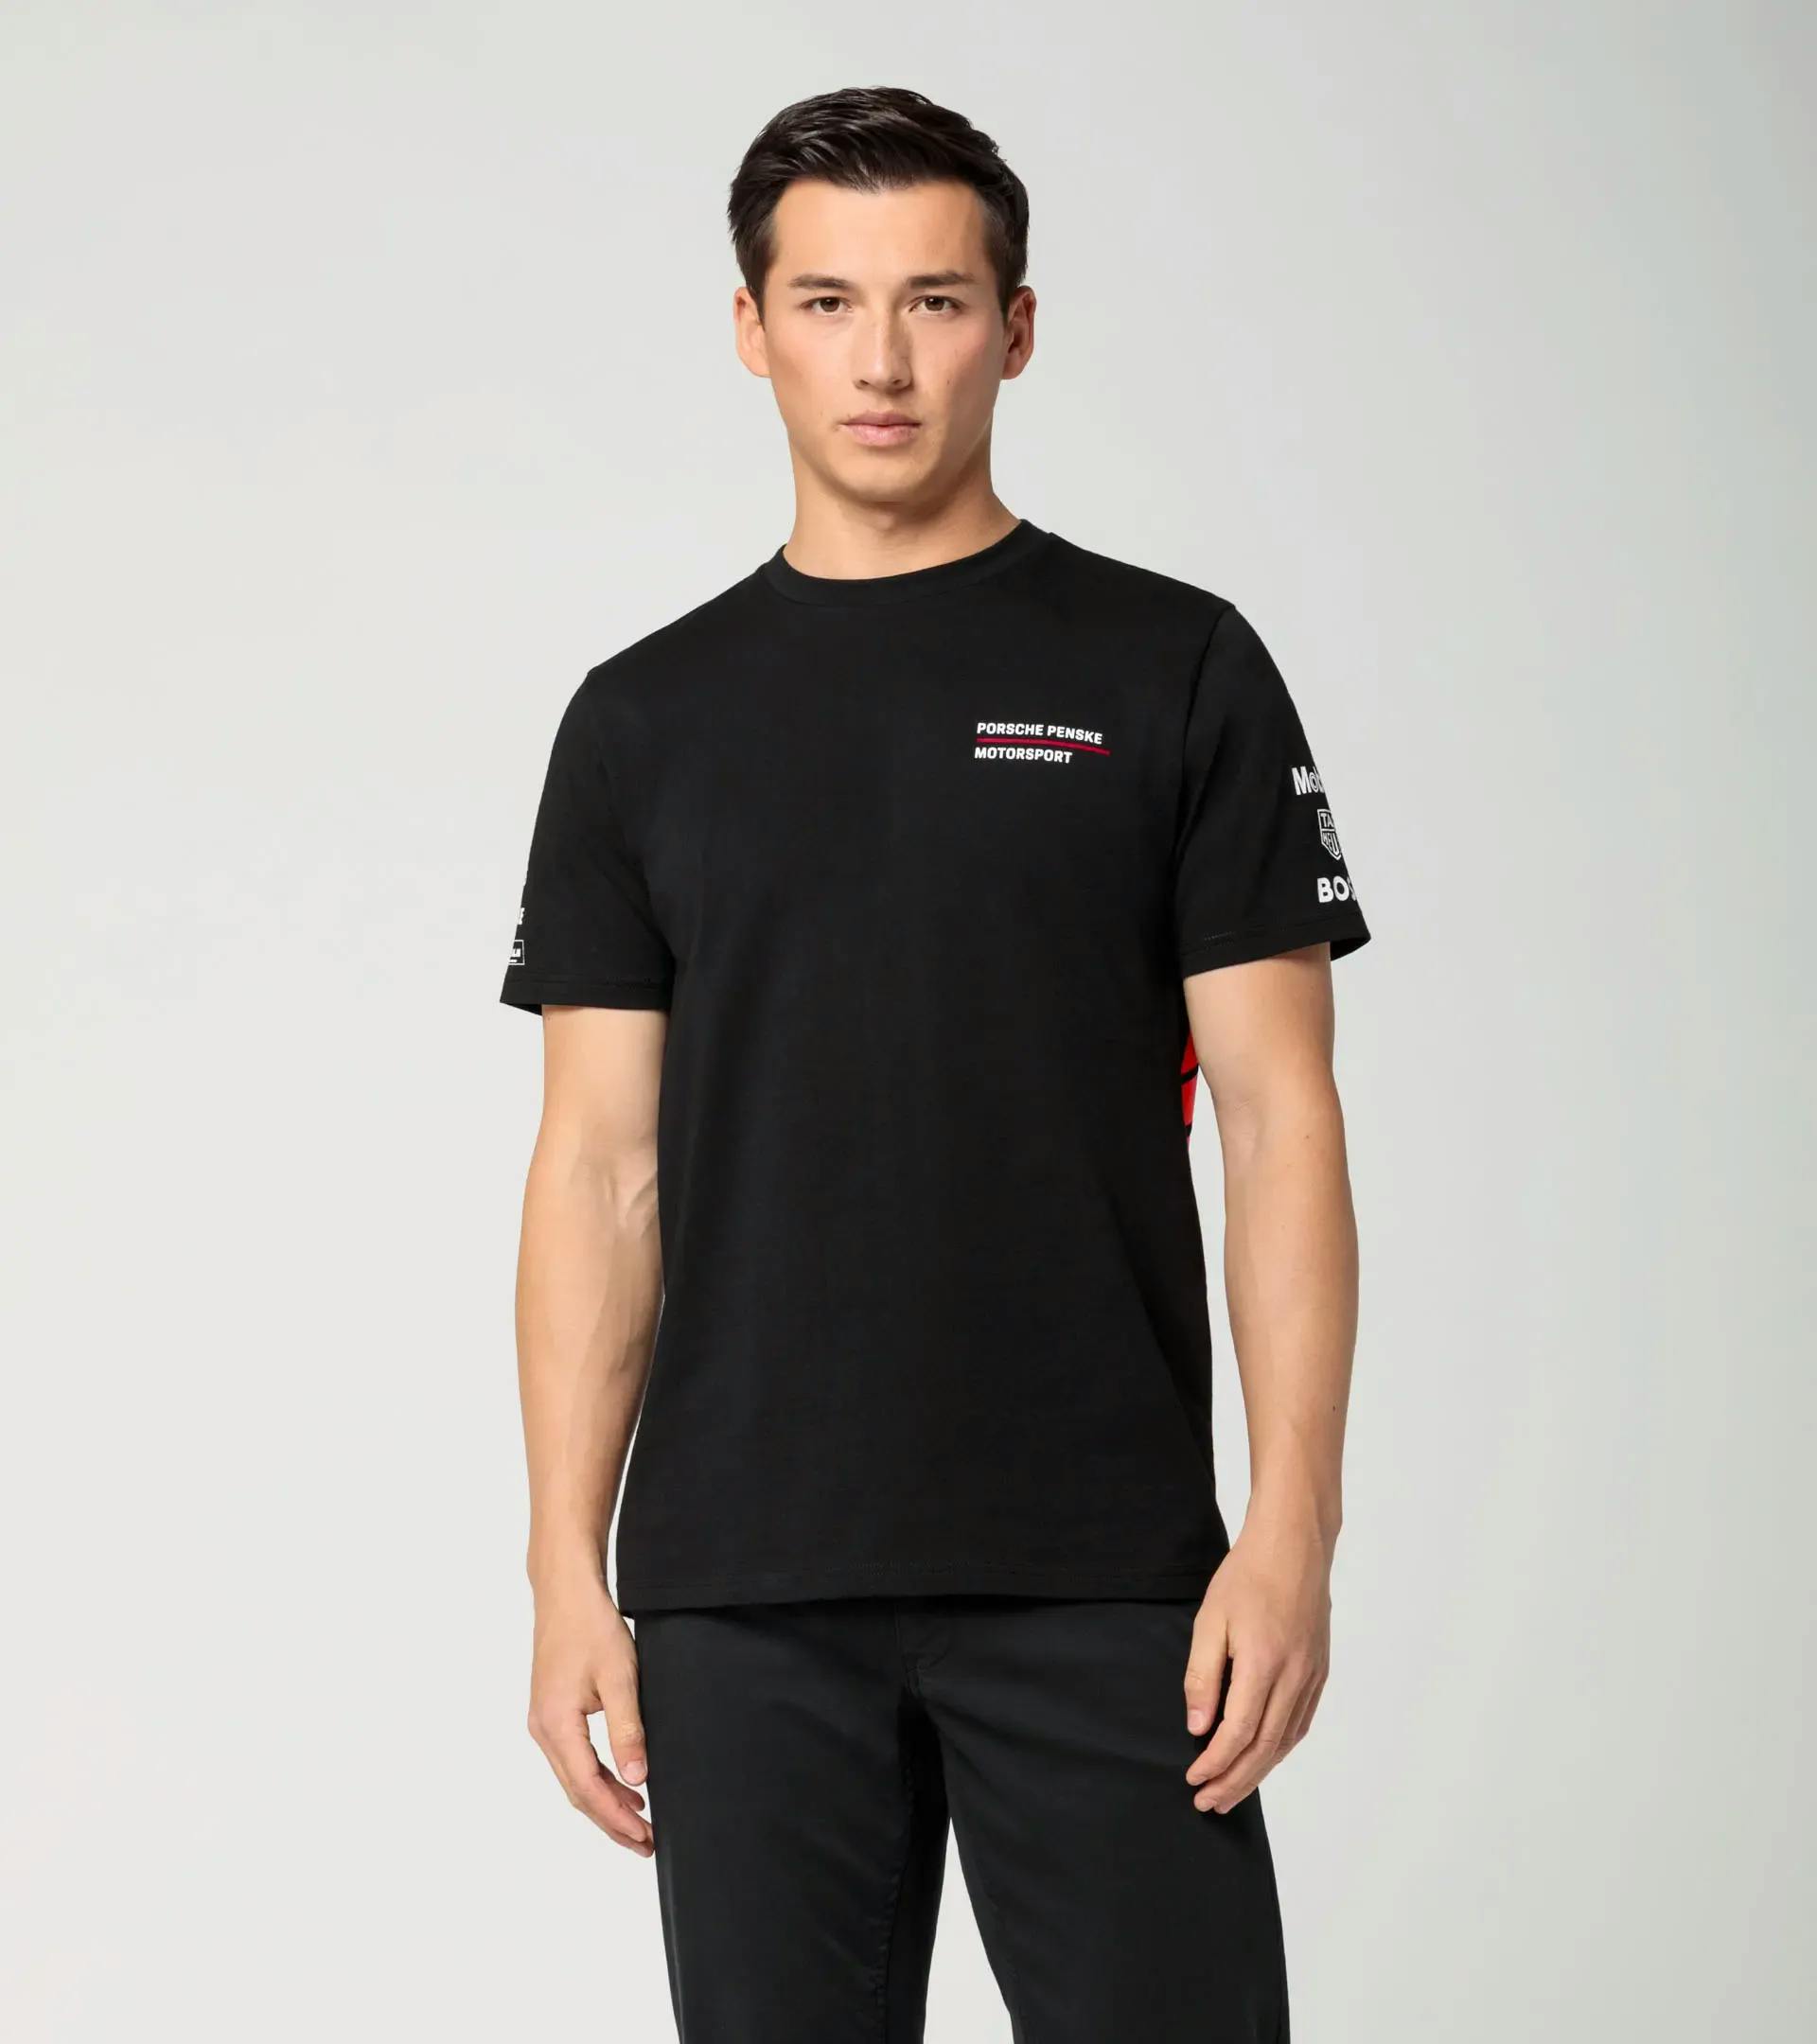 Camiseta unisex – Porsche Penske Motorsport 5